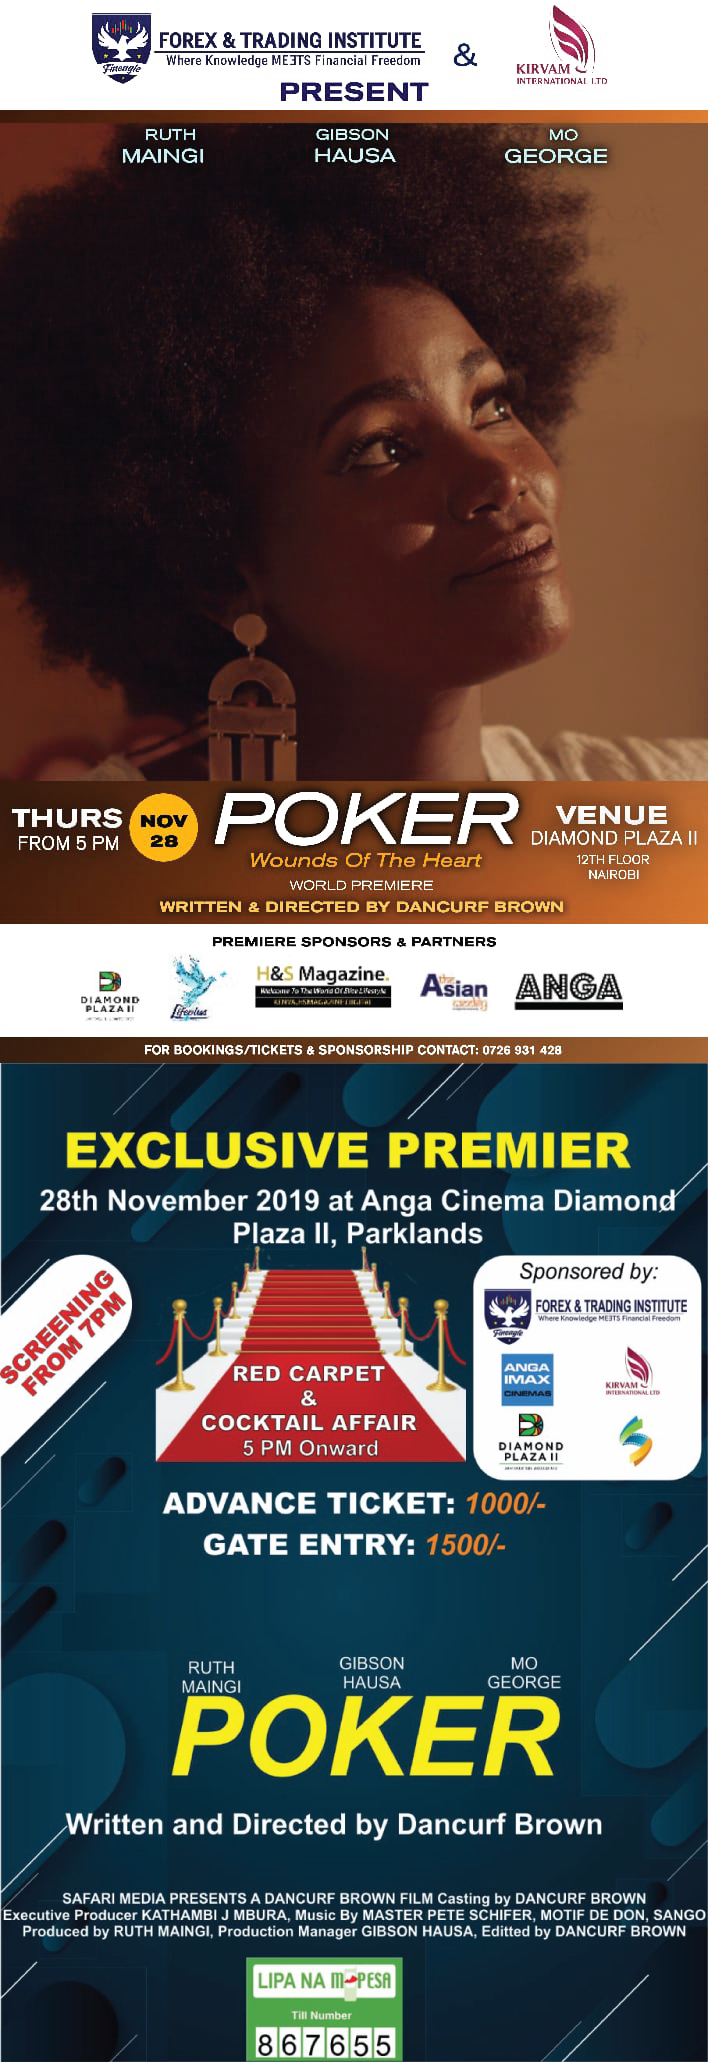 POKER- Exclusive Premier At ANGA Cinema Diamond Plaza- 28th November 2019